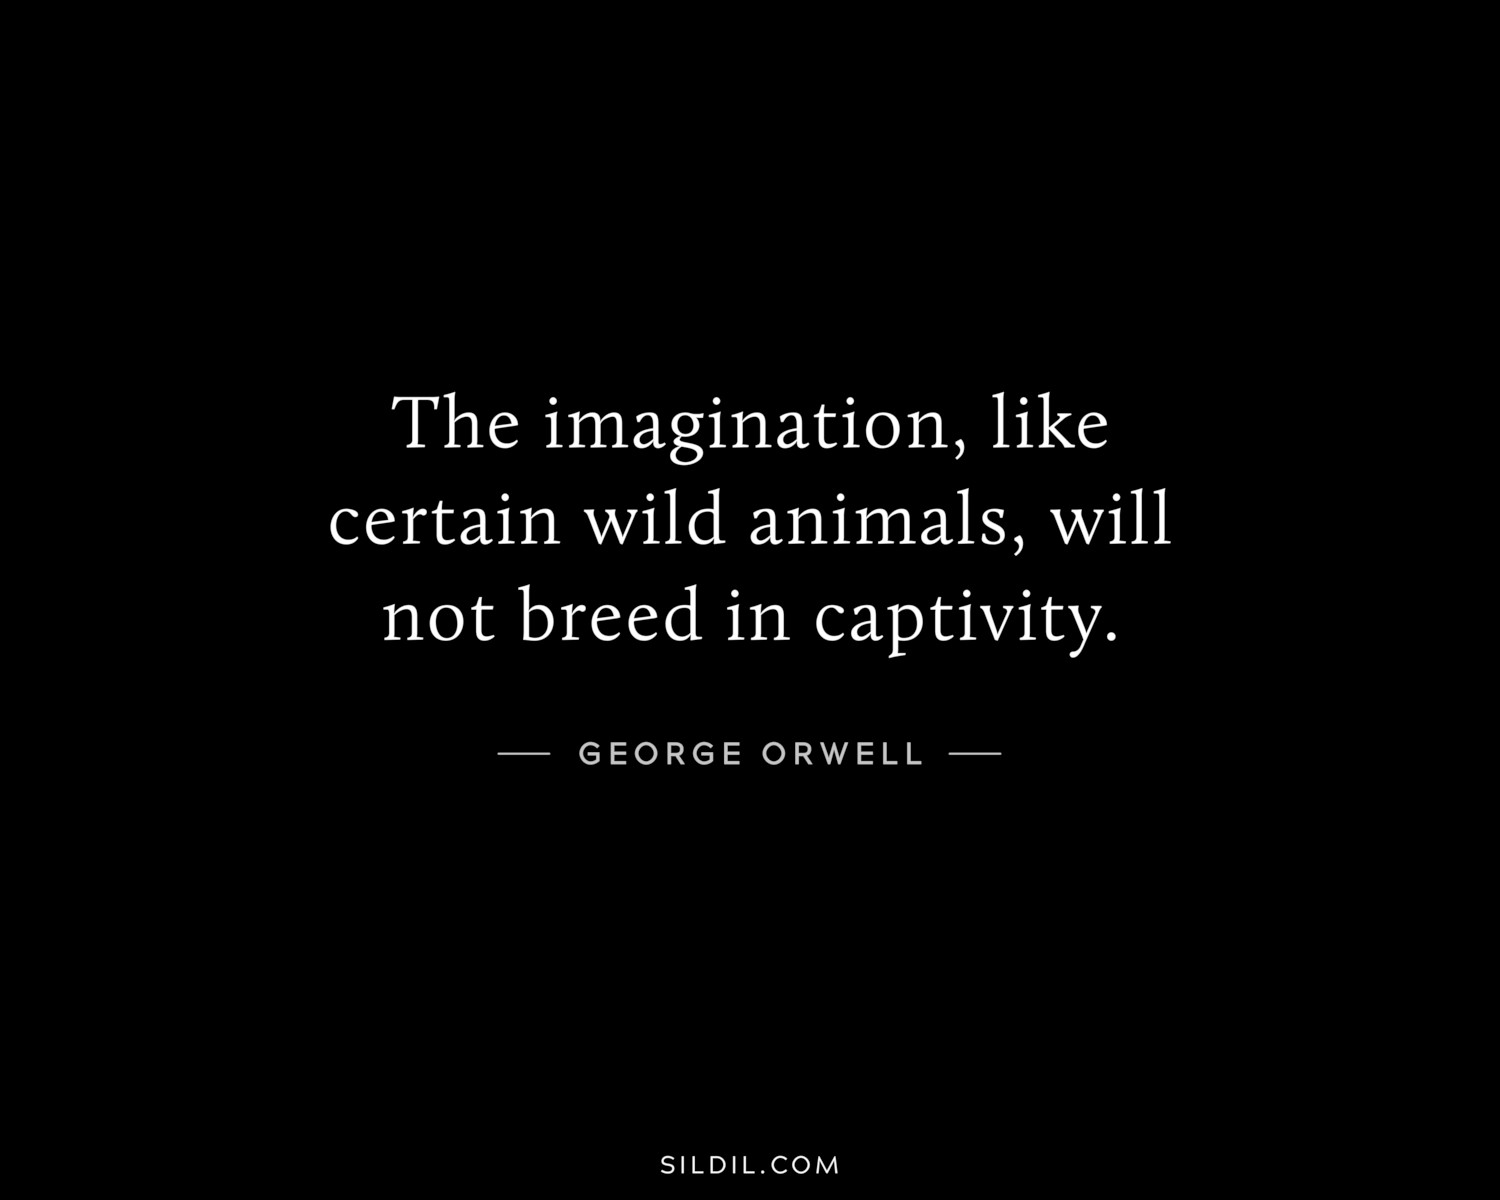 The imagination, like certain wild animals, will not breed in captivity.